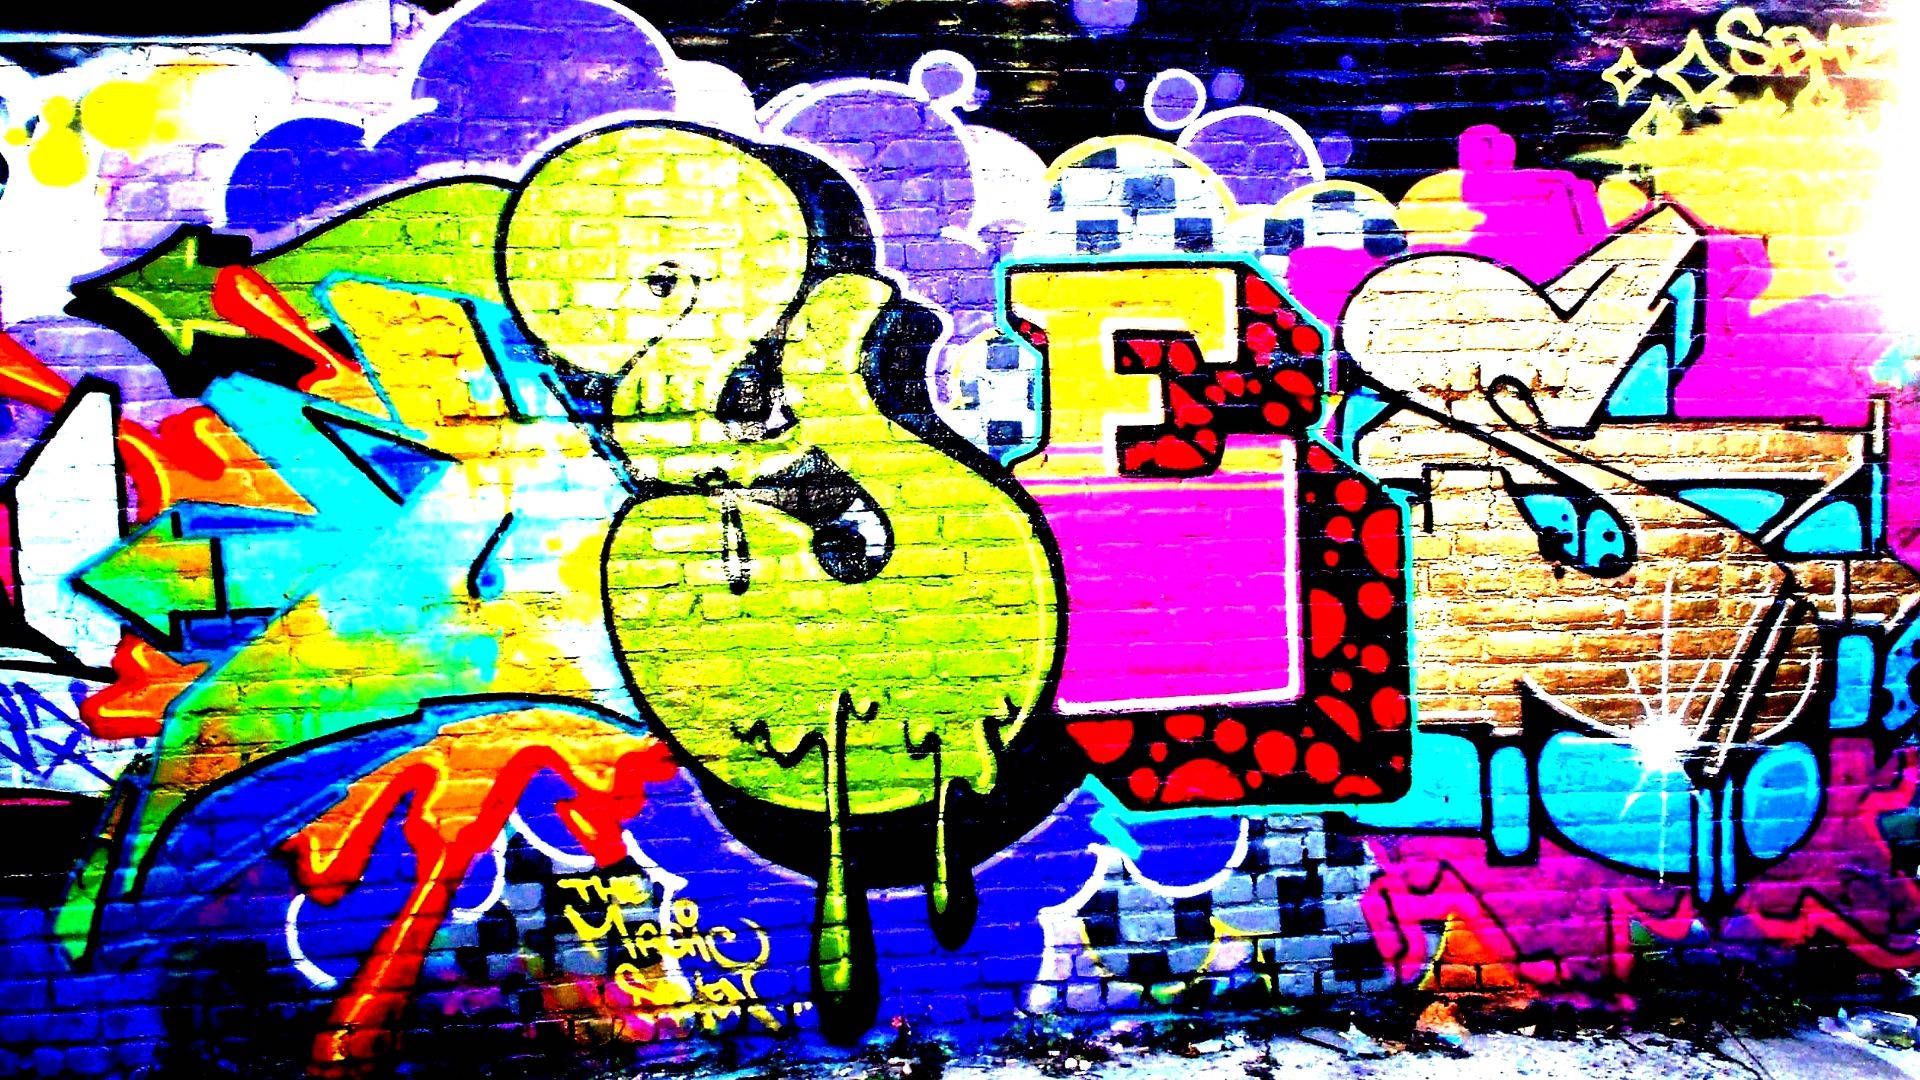 Free Graffiti Wallpaper Downloads, Graffiti Wallpaper for FREE